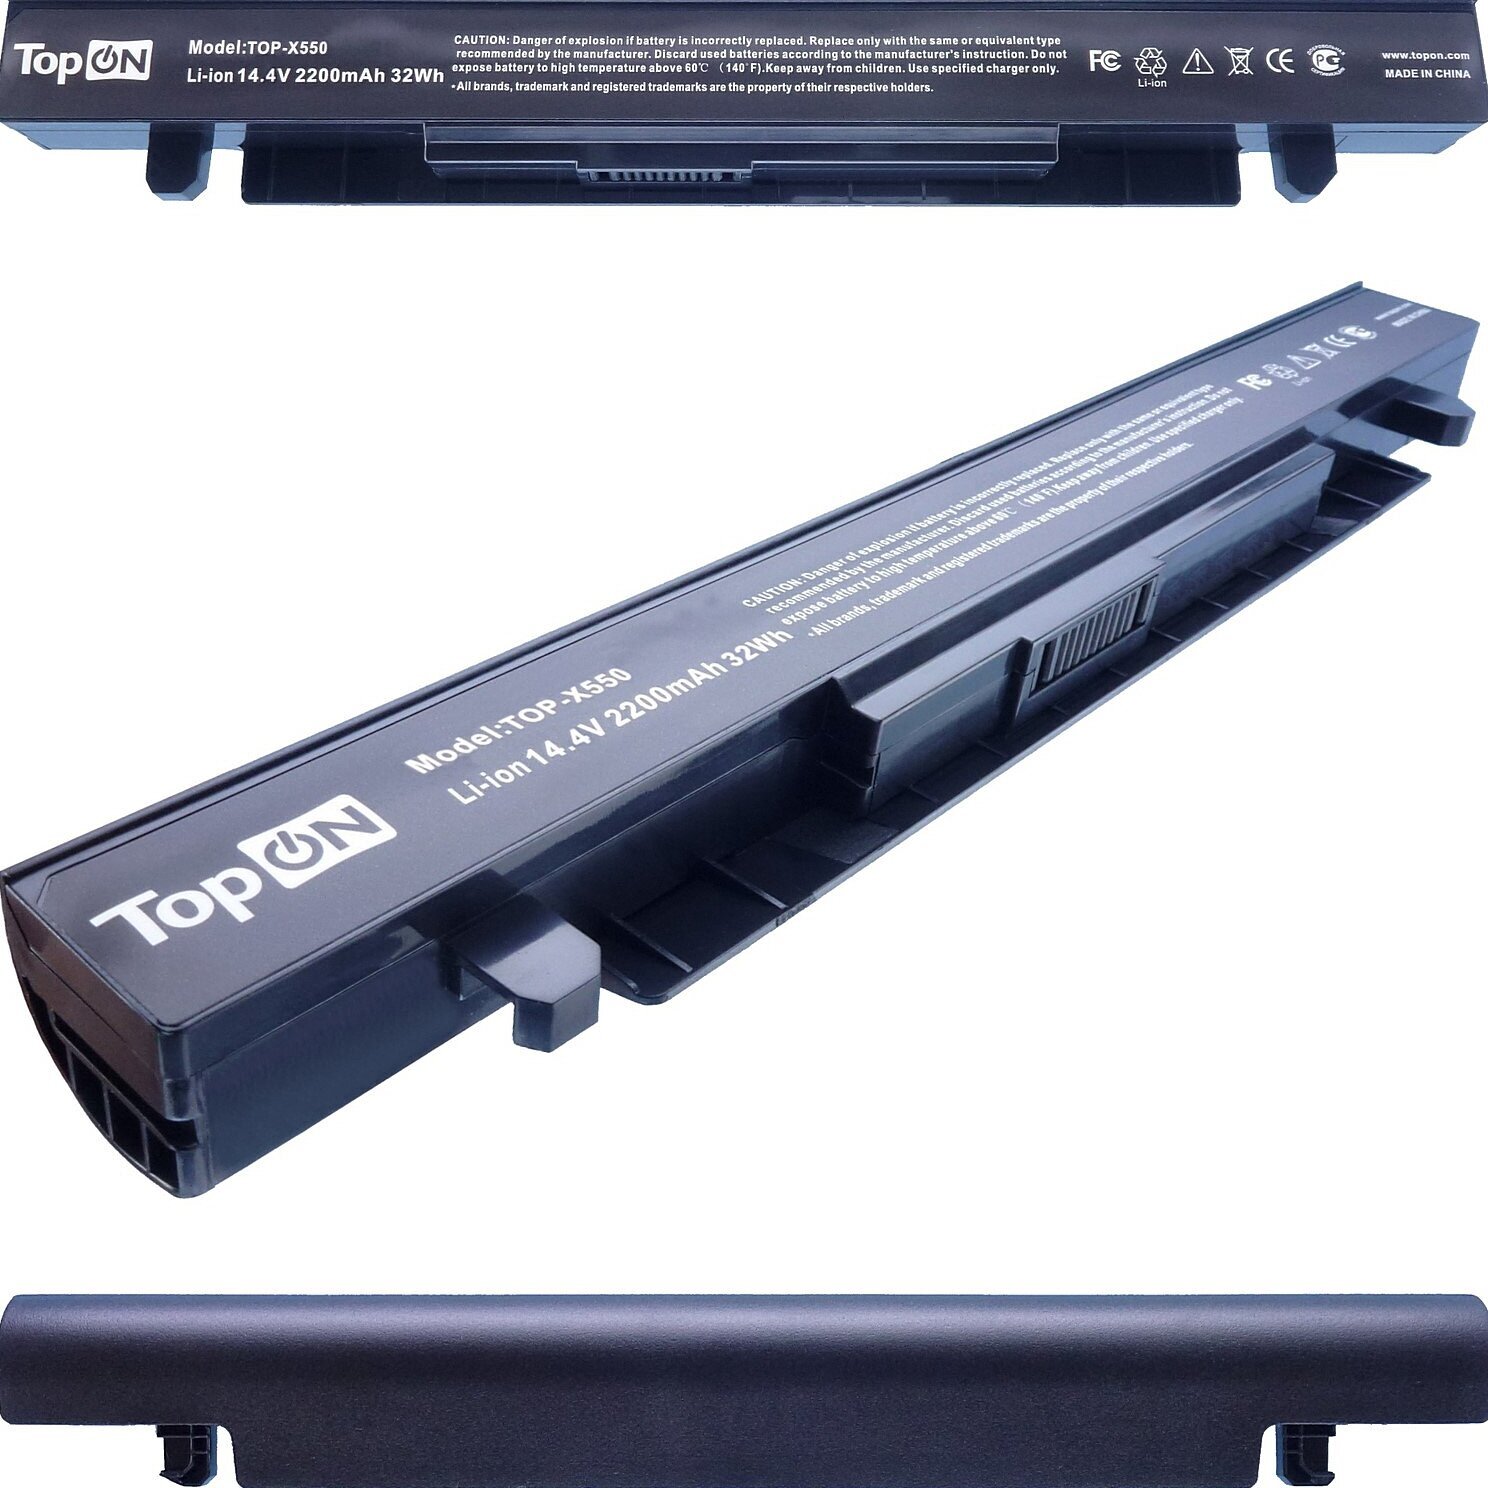 Аккумулятор для ноутбука Asus X550, X550D, X550A, X550L, X550C, X550V Series 2200мАч 14.4V TopON TOP-X550 - фото №9